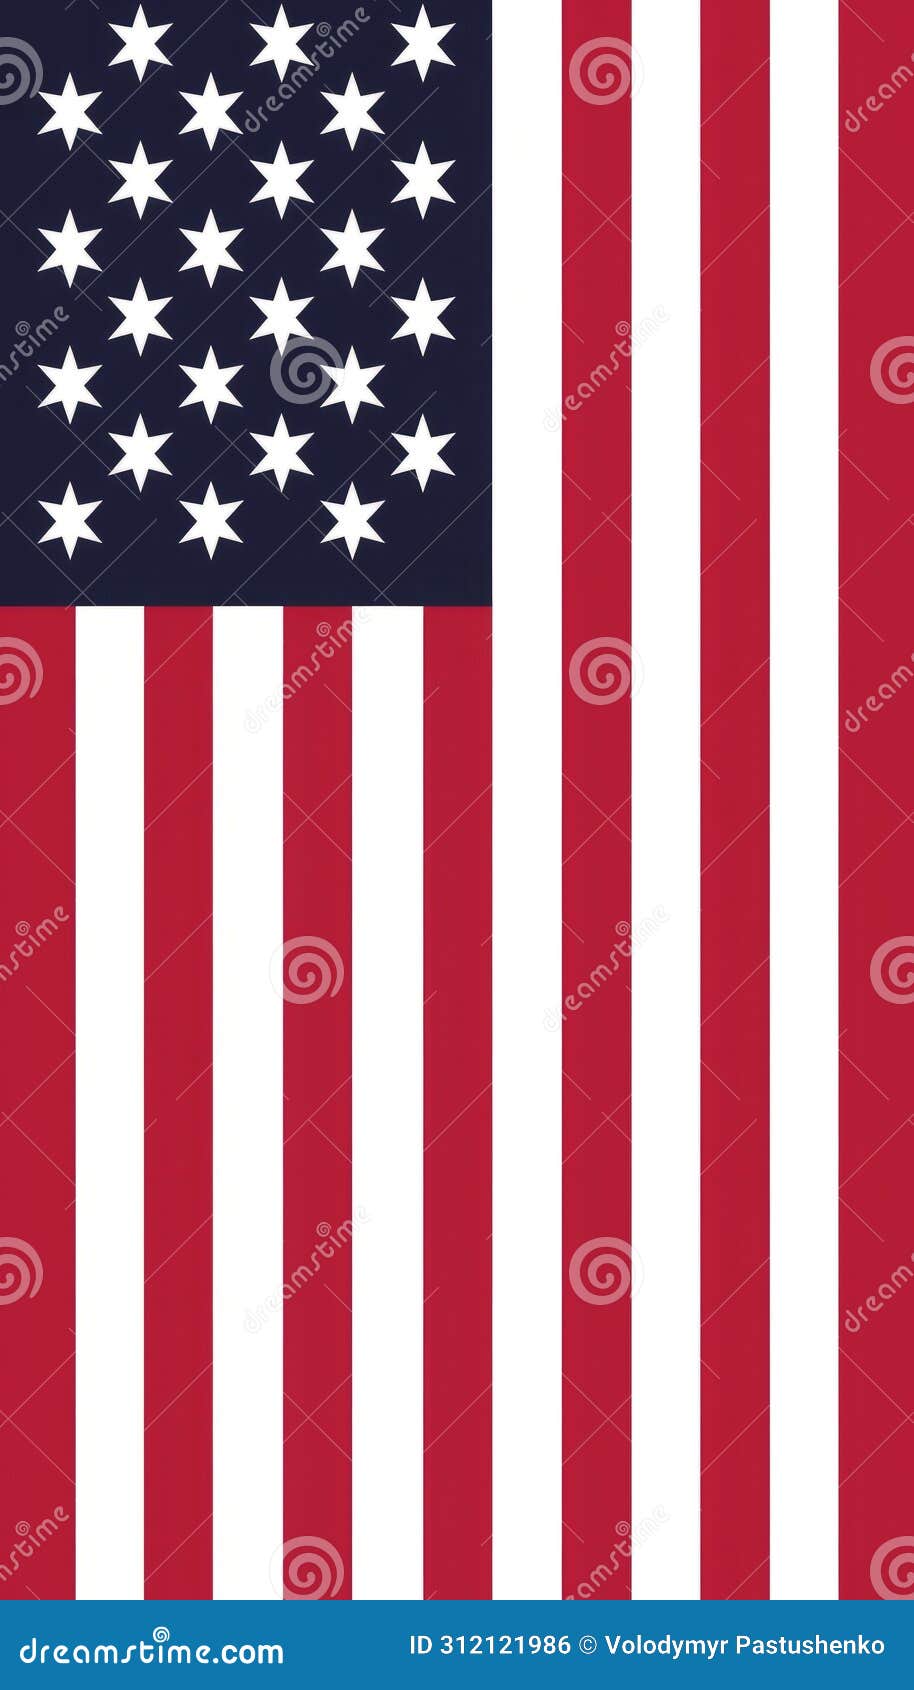 american flag - wikipedia the free encyclopedia